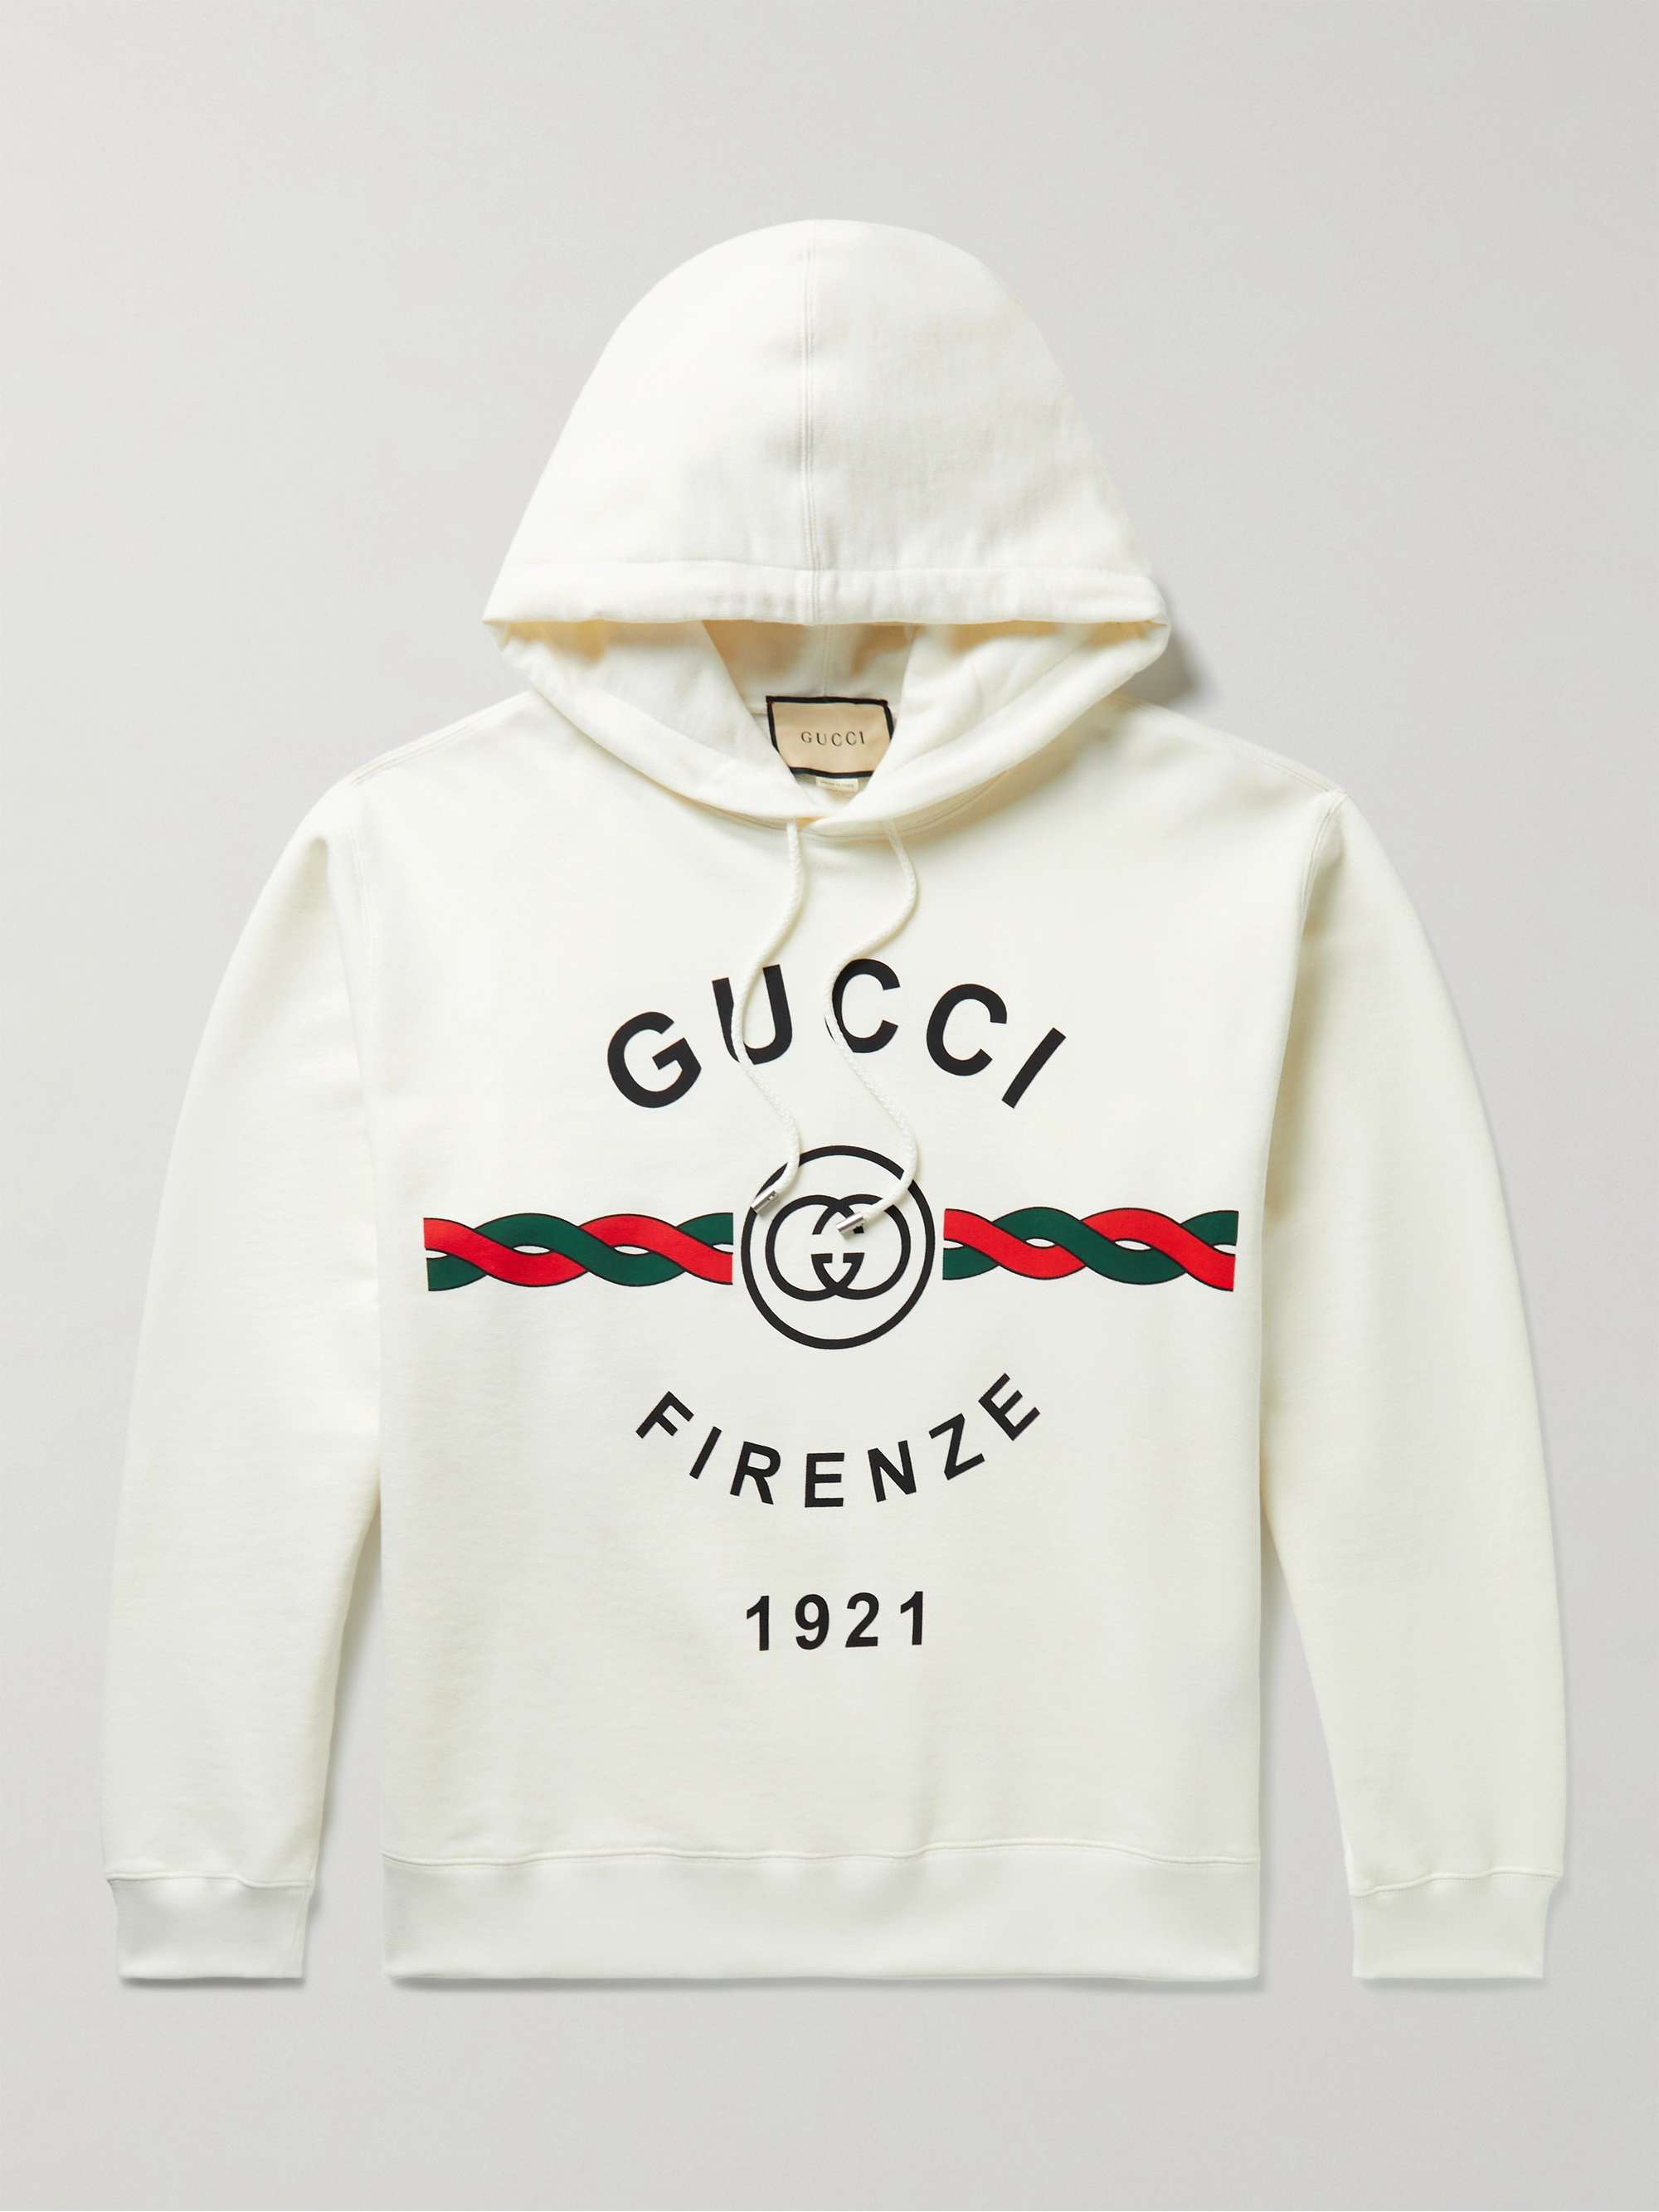 Gucci sweatshirt blog.knak.jp